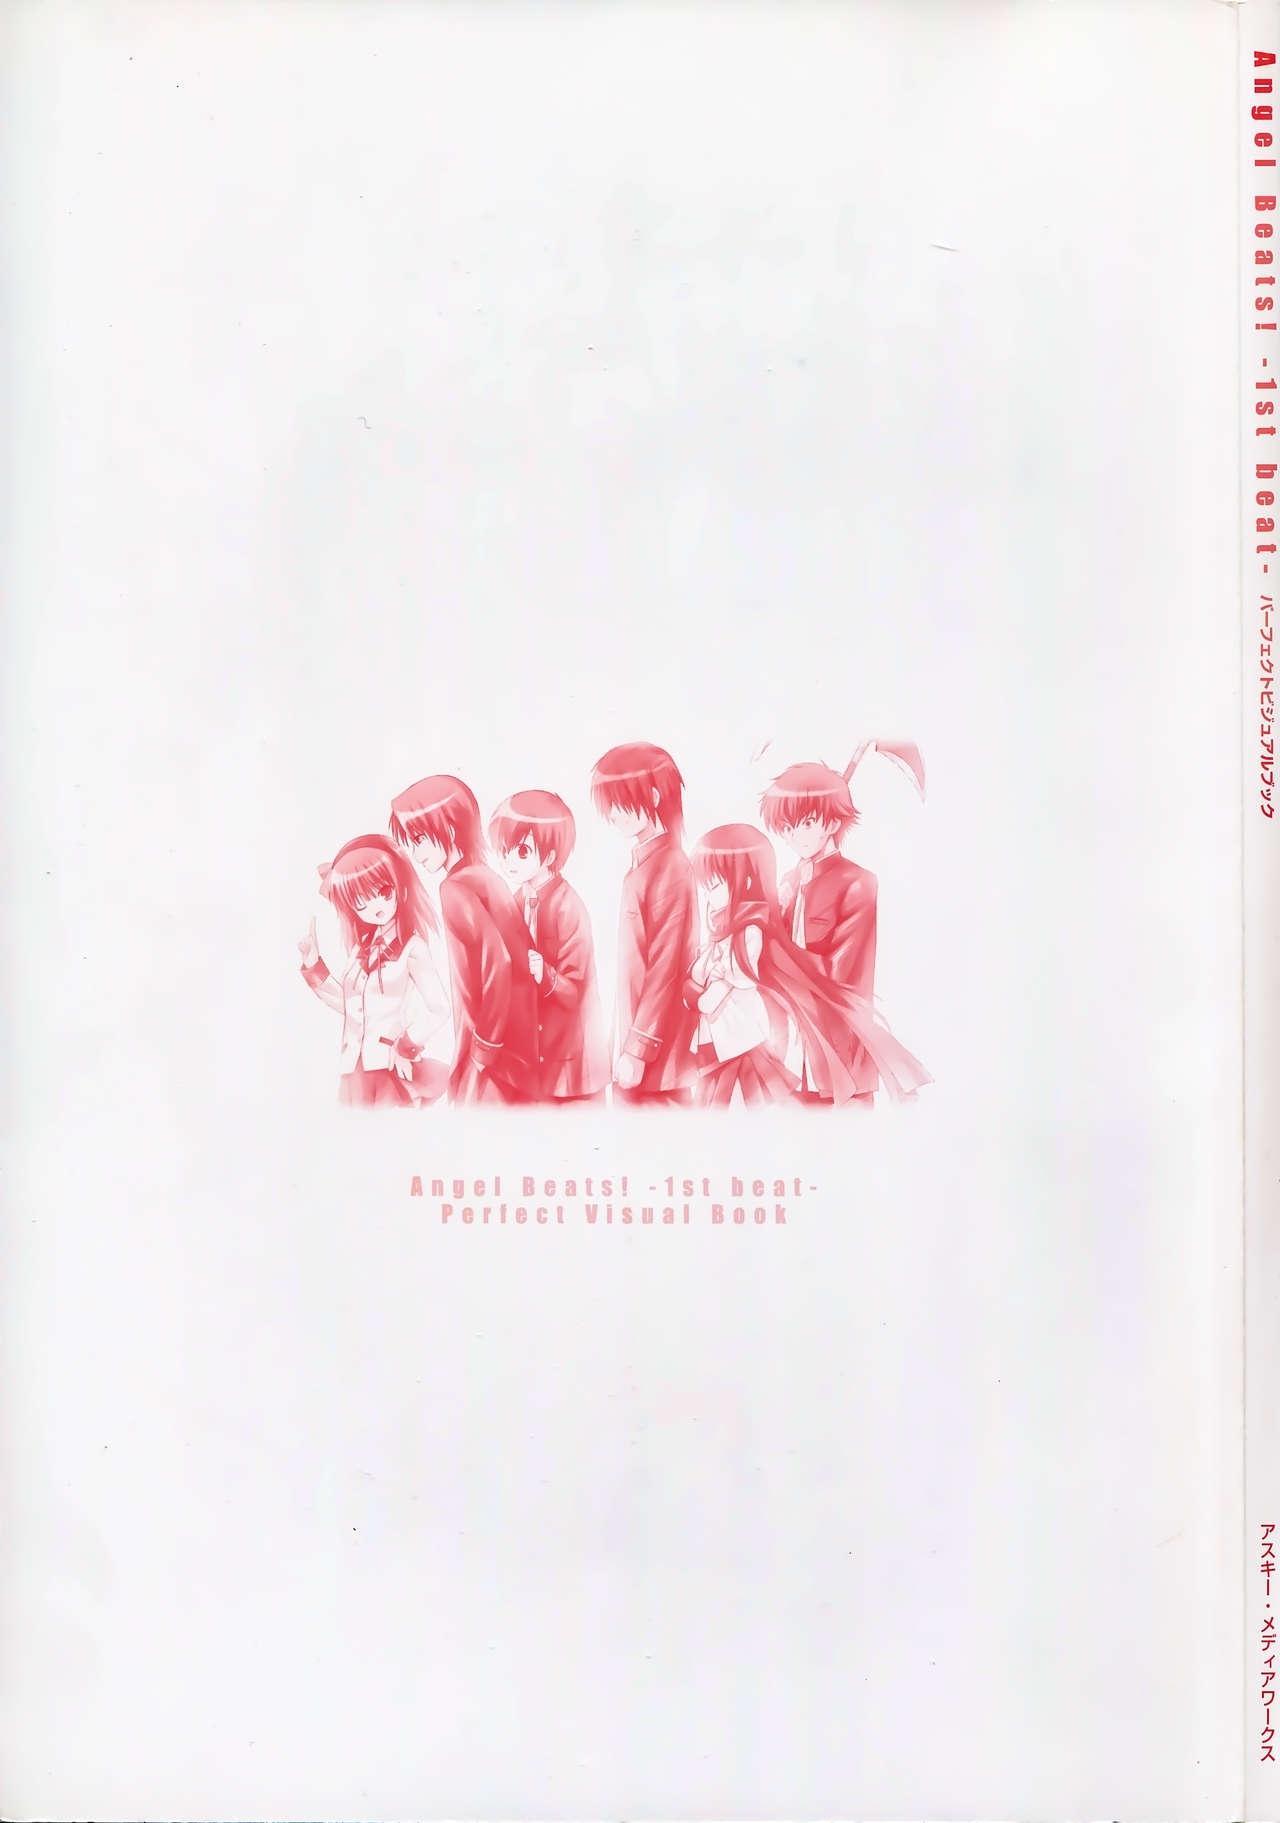 Angel Beats! -1st beat- Perfect Visual Book 149